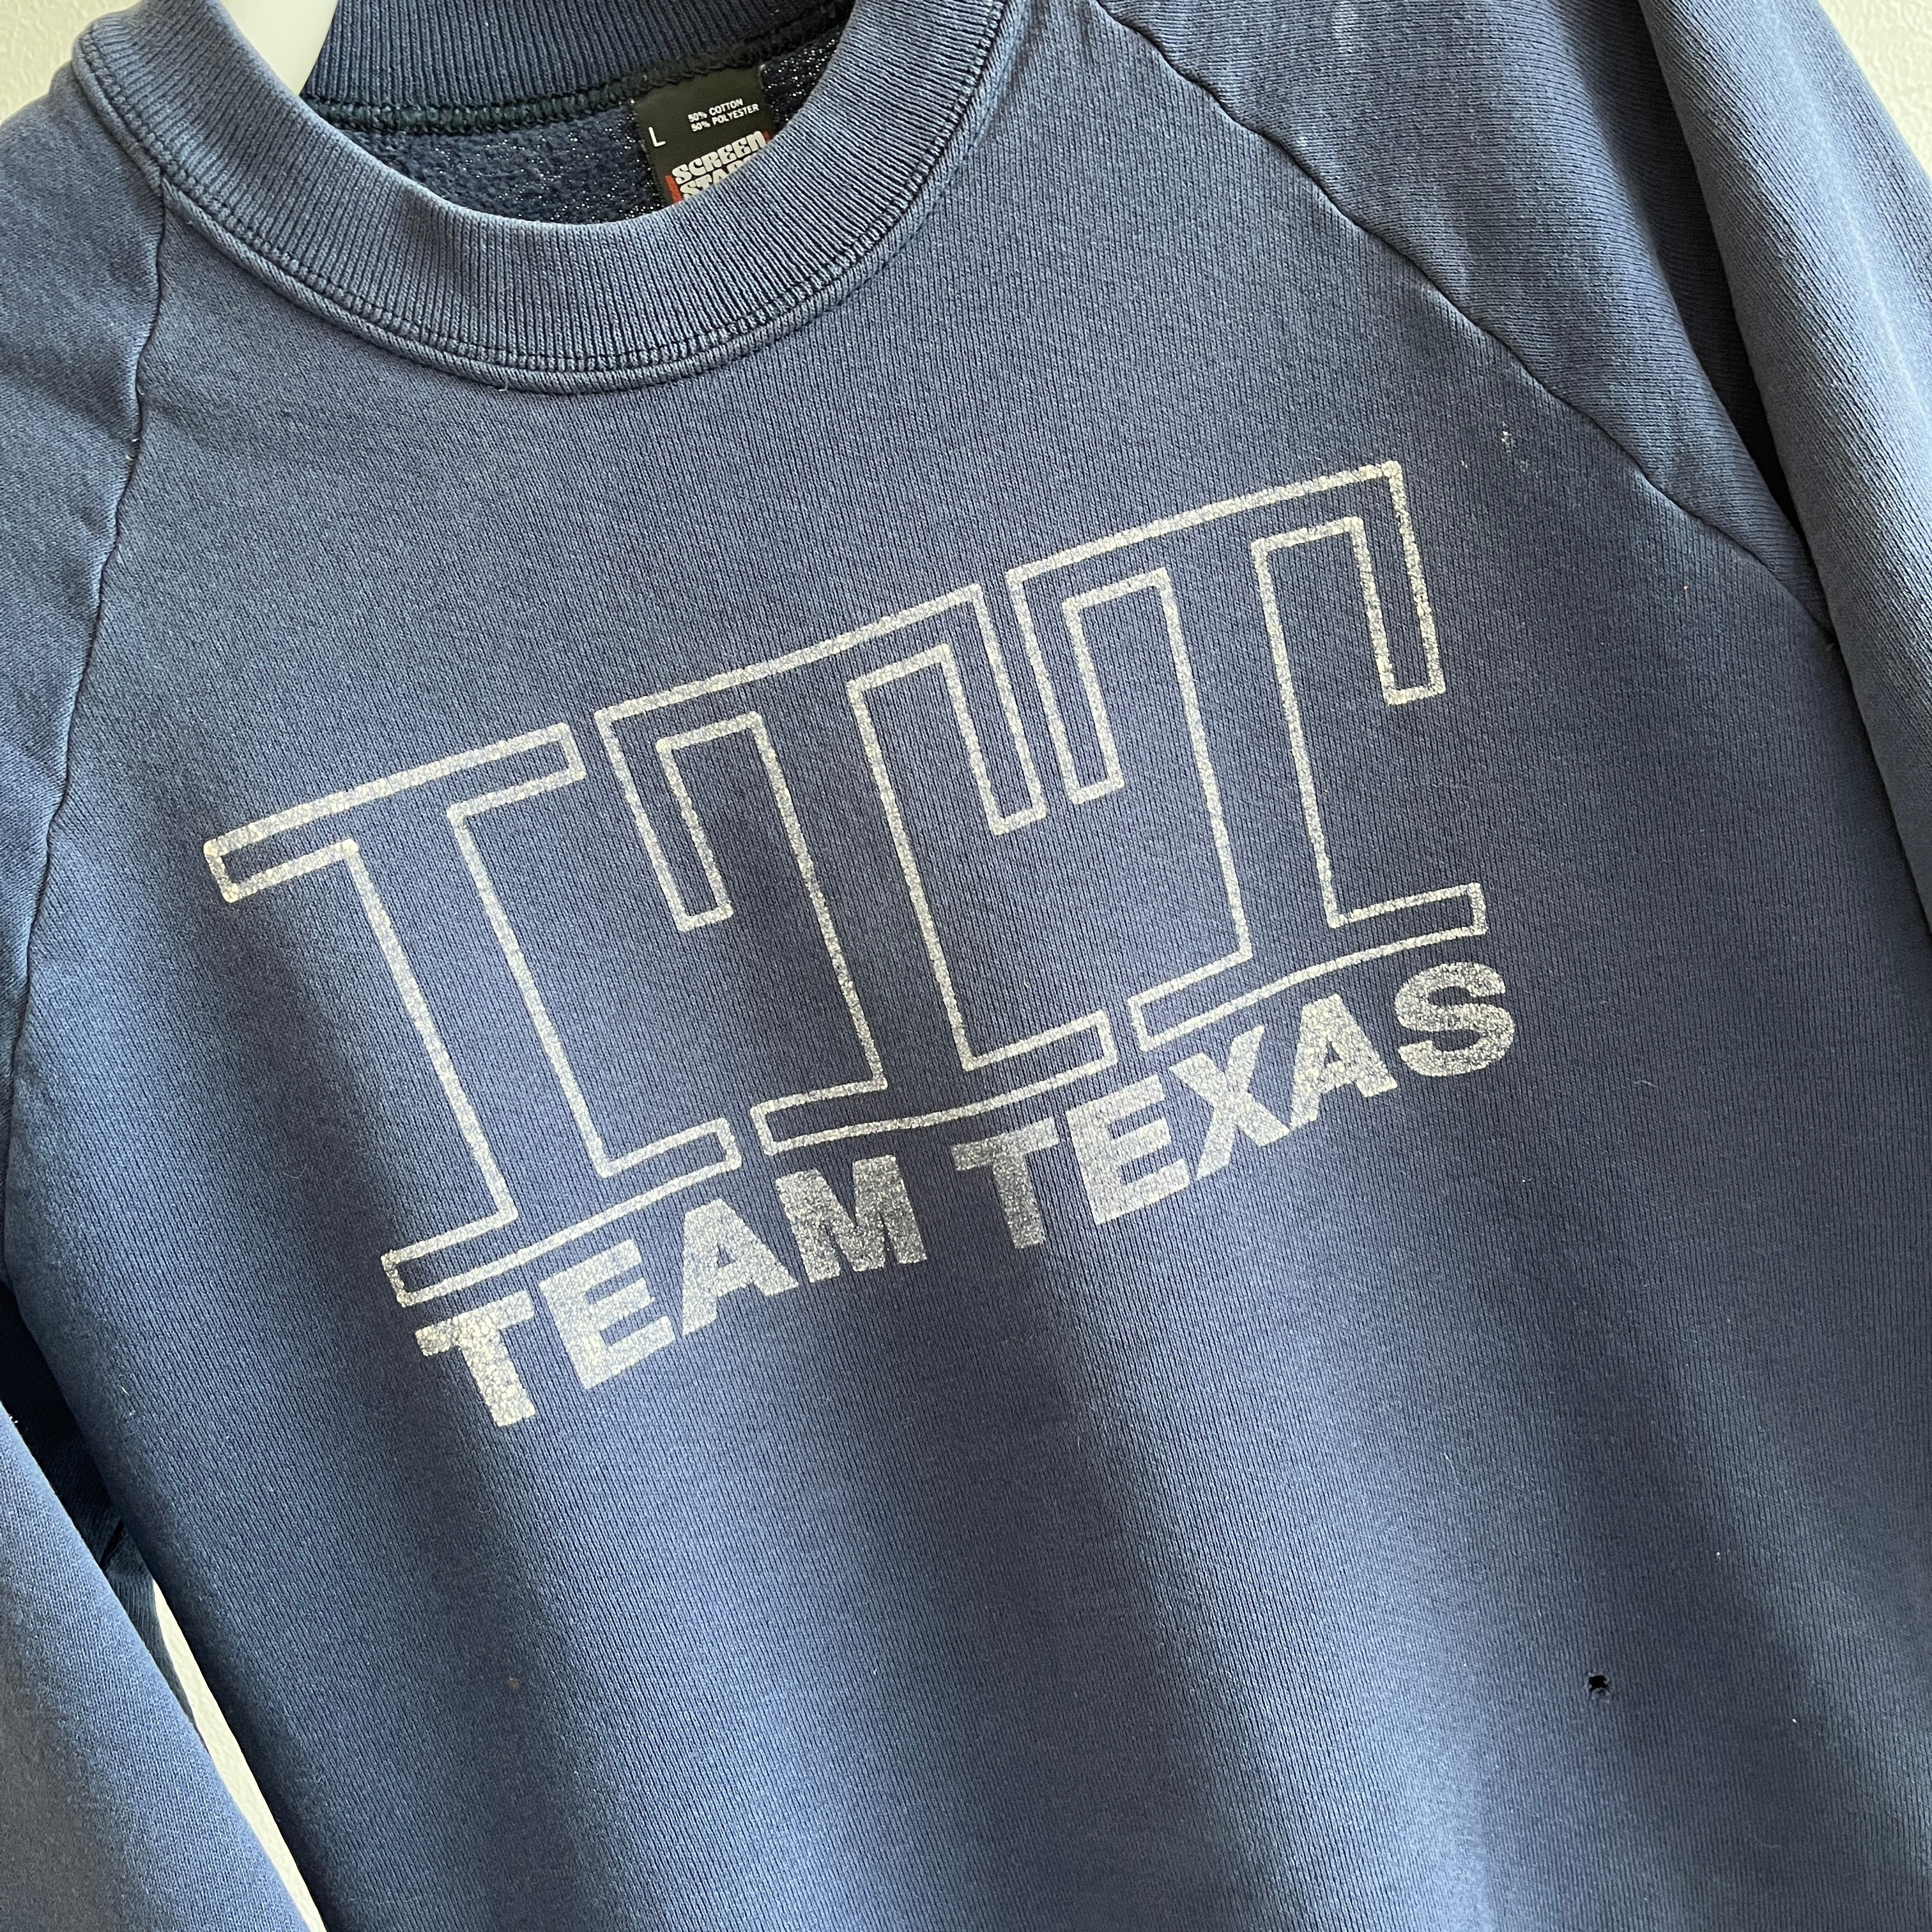 1980s ITT Team Texas Sweatshirt  by Screen Stars